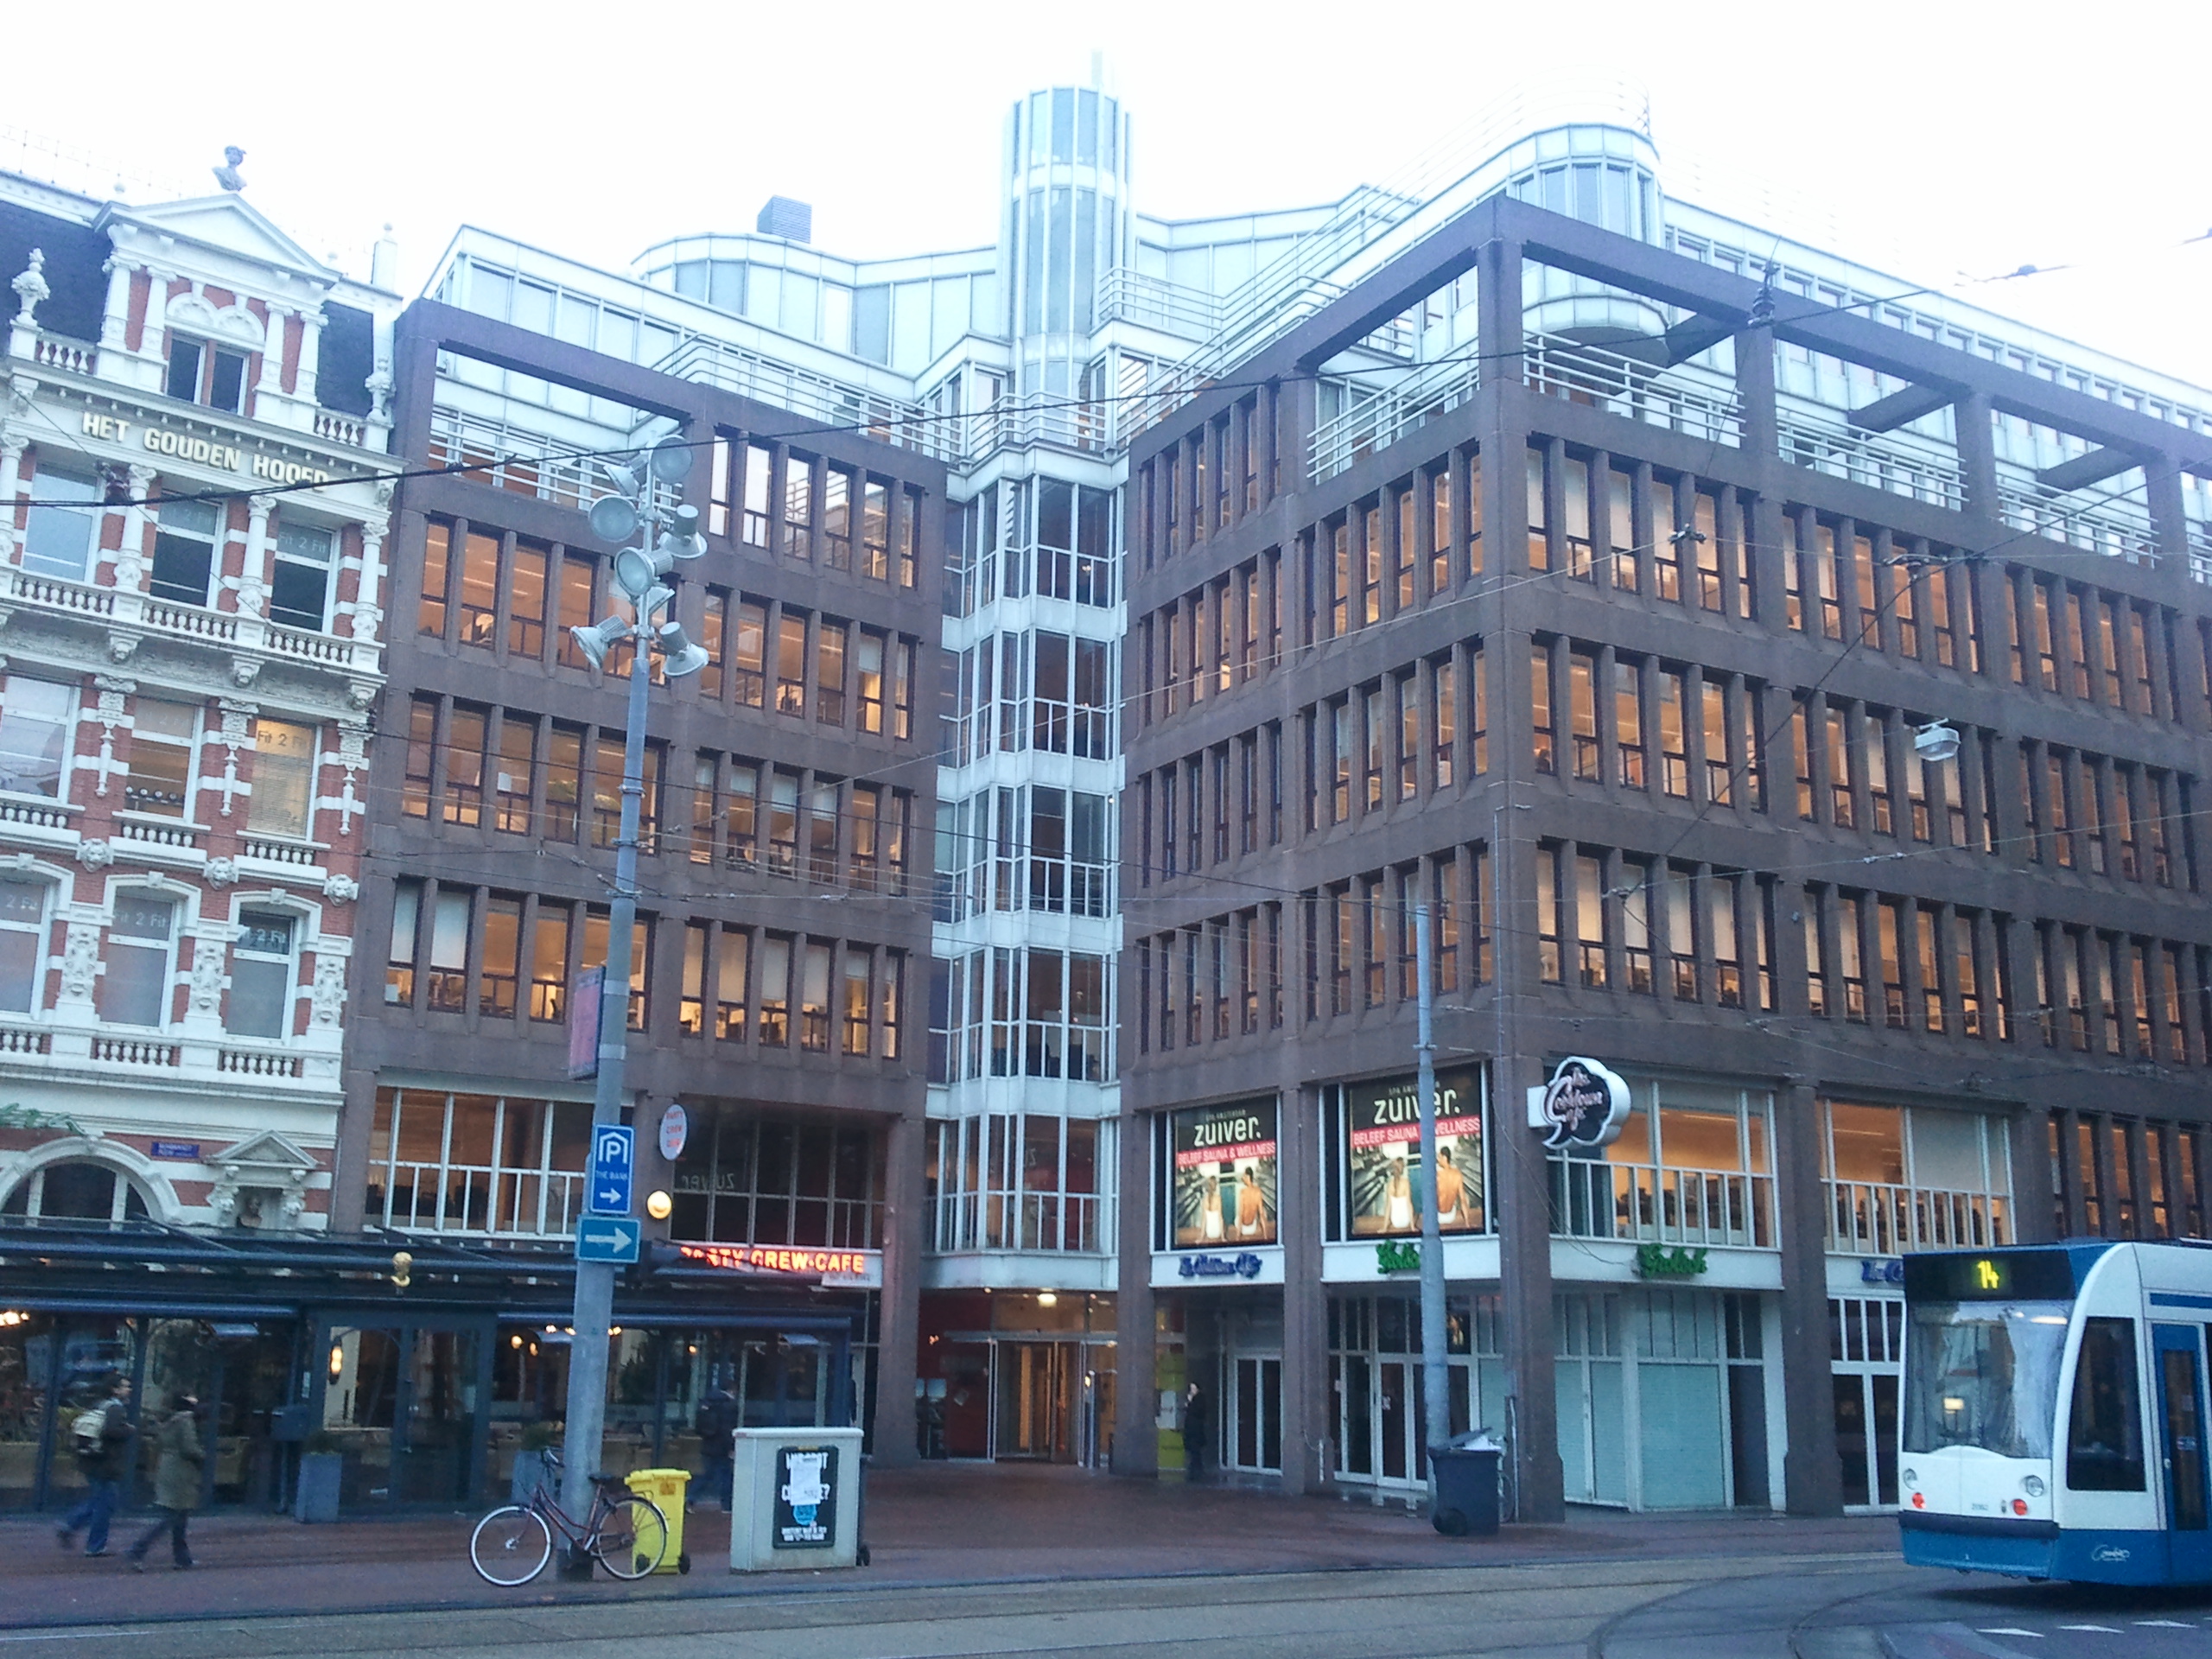 TomTom Office in Amsterdam